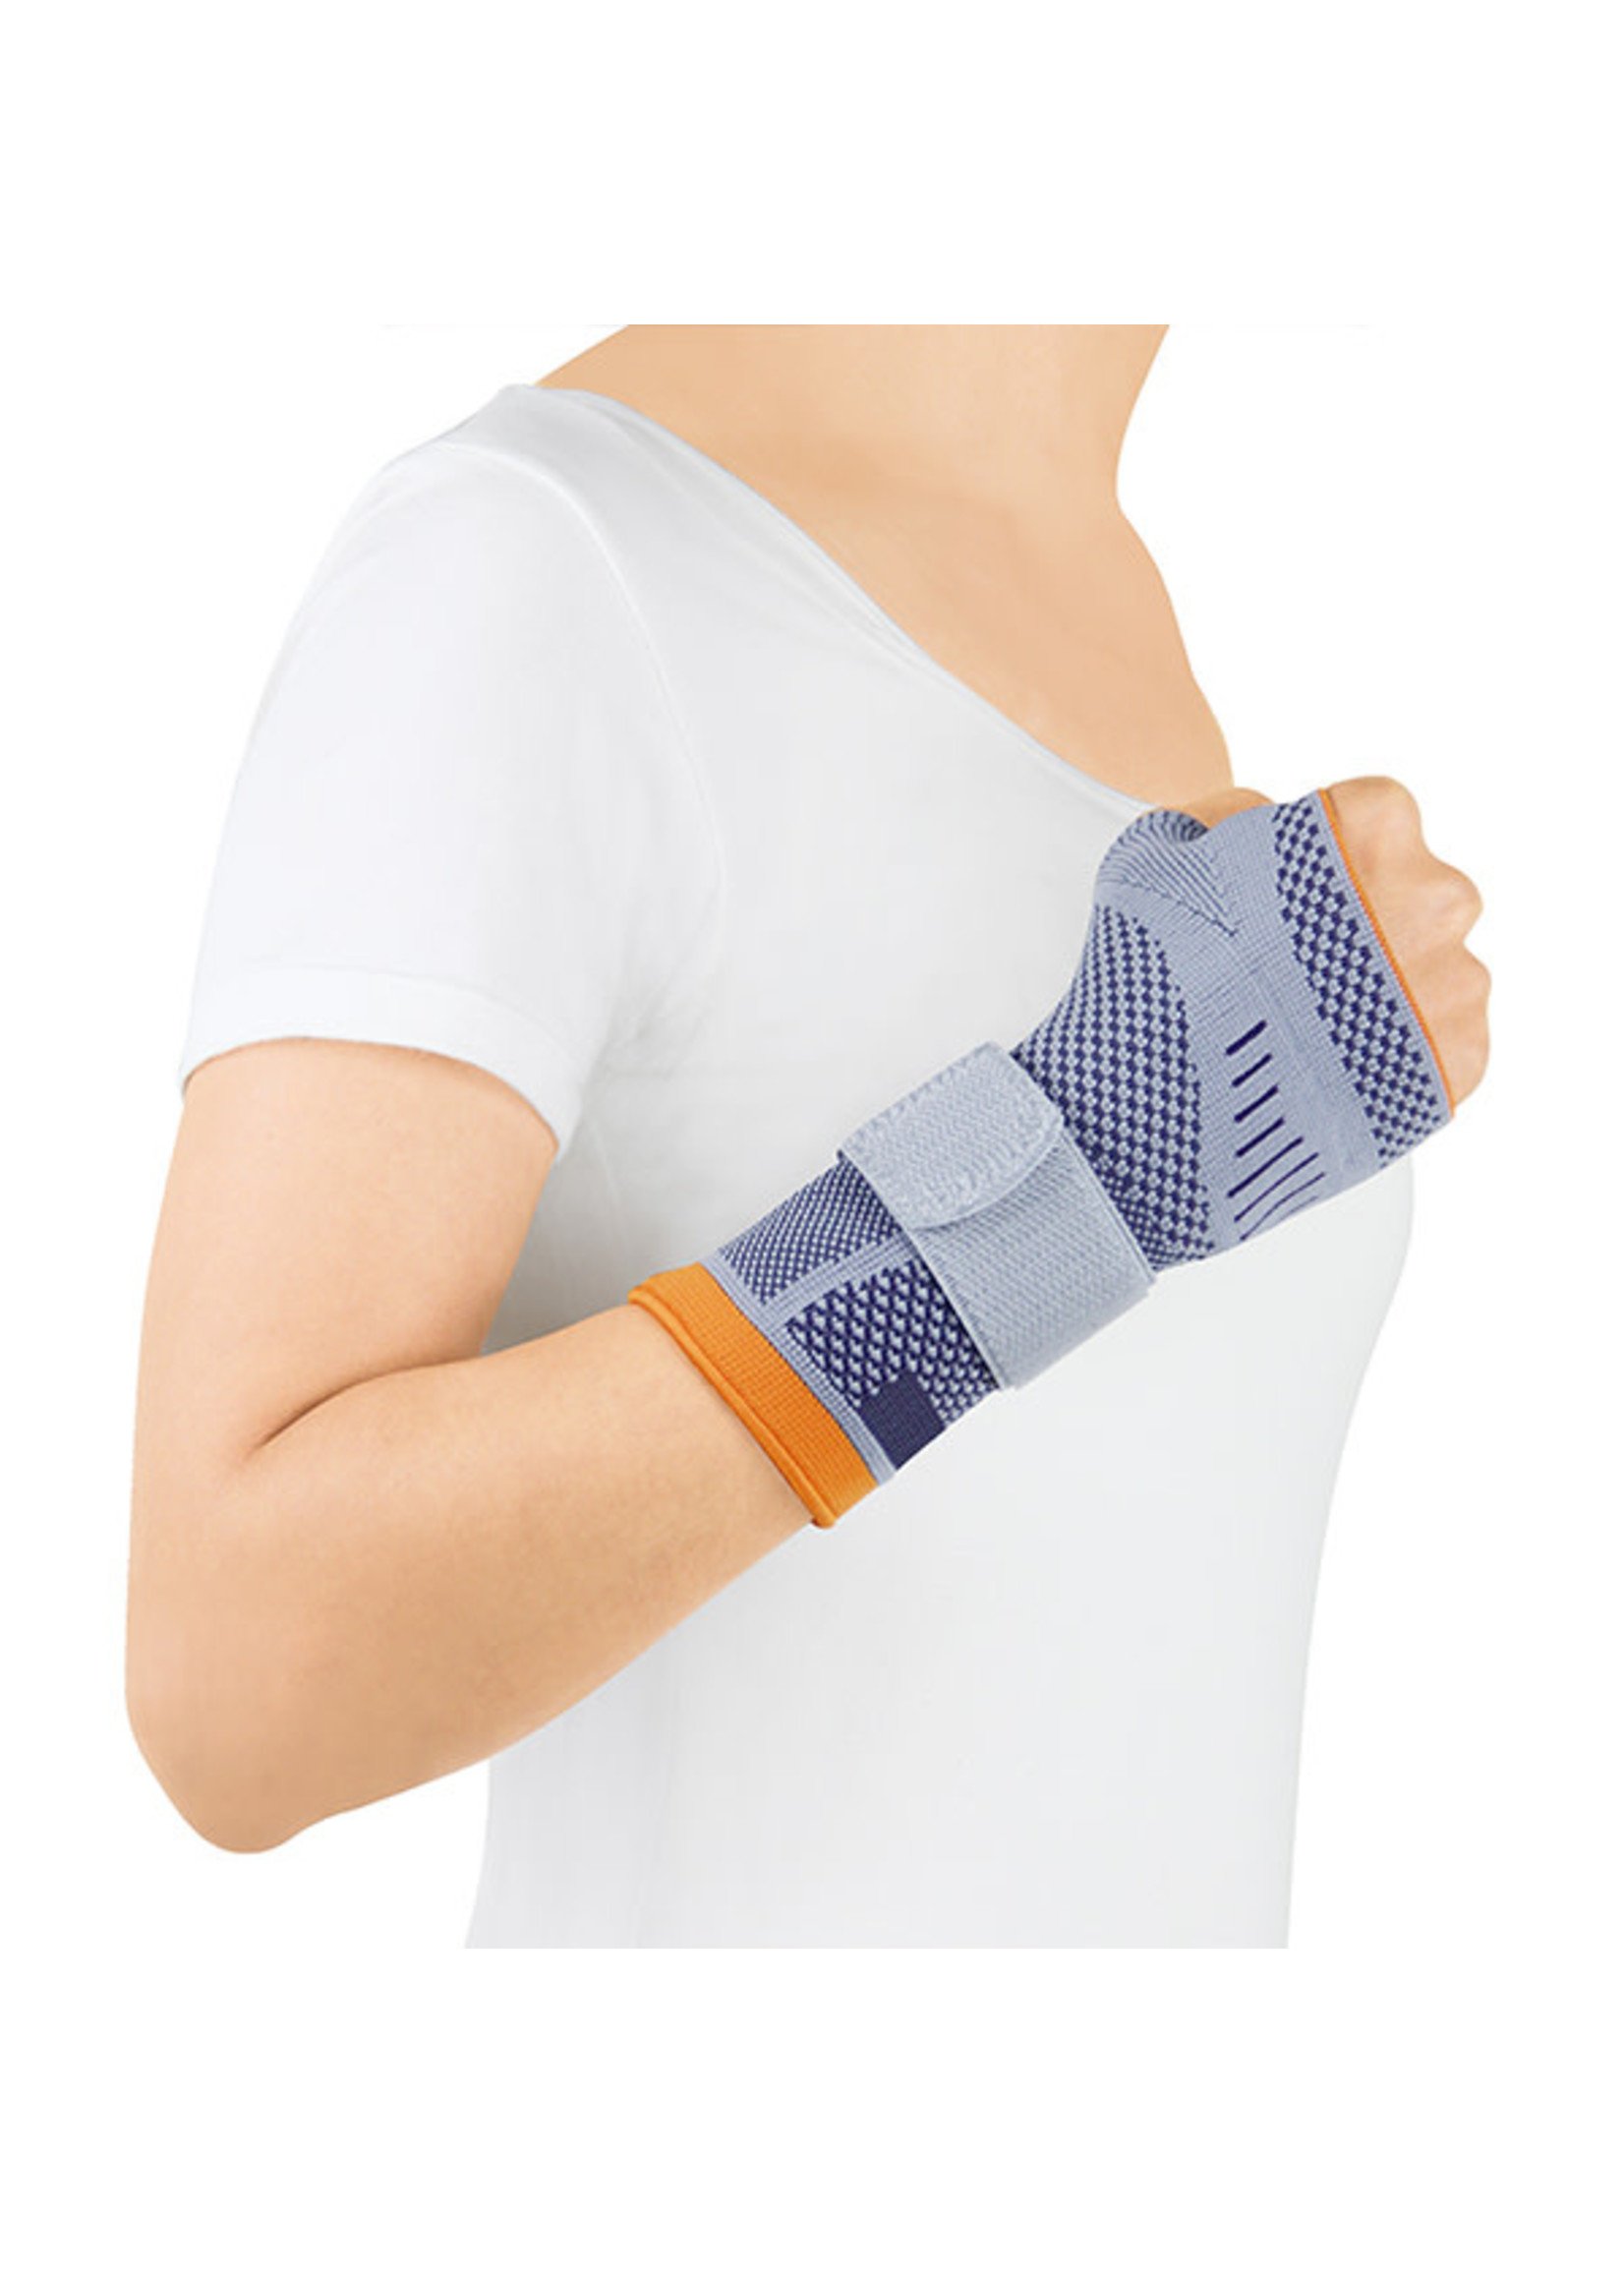 Orthoactive 3D Elastic Wrist Support - Large